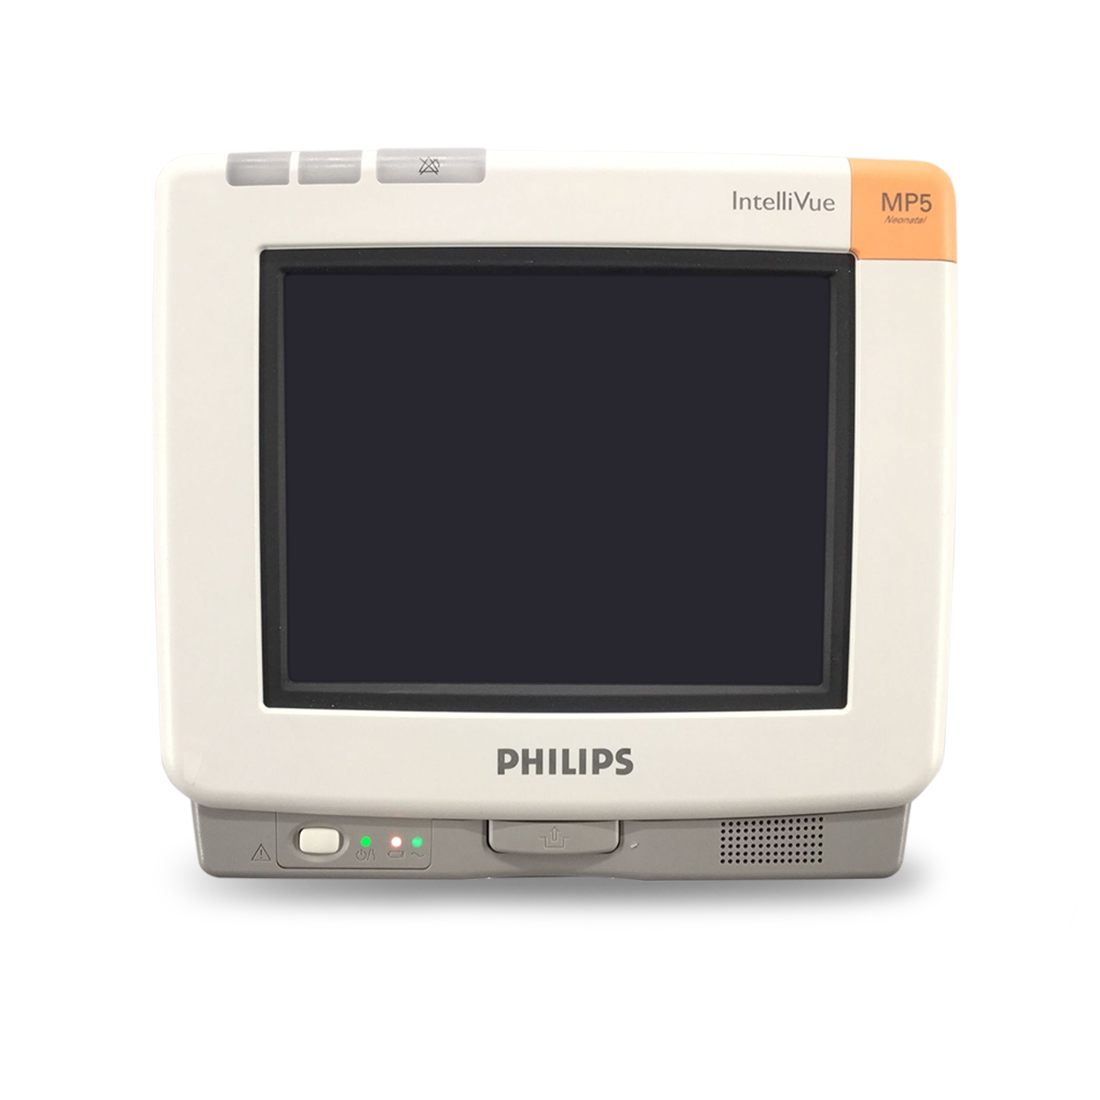 Philips IntelliVue MP5 Patient Monitor